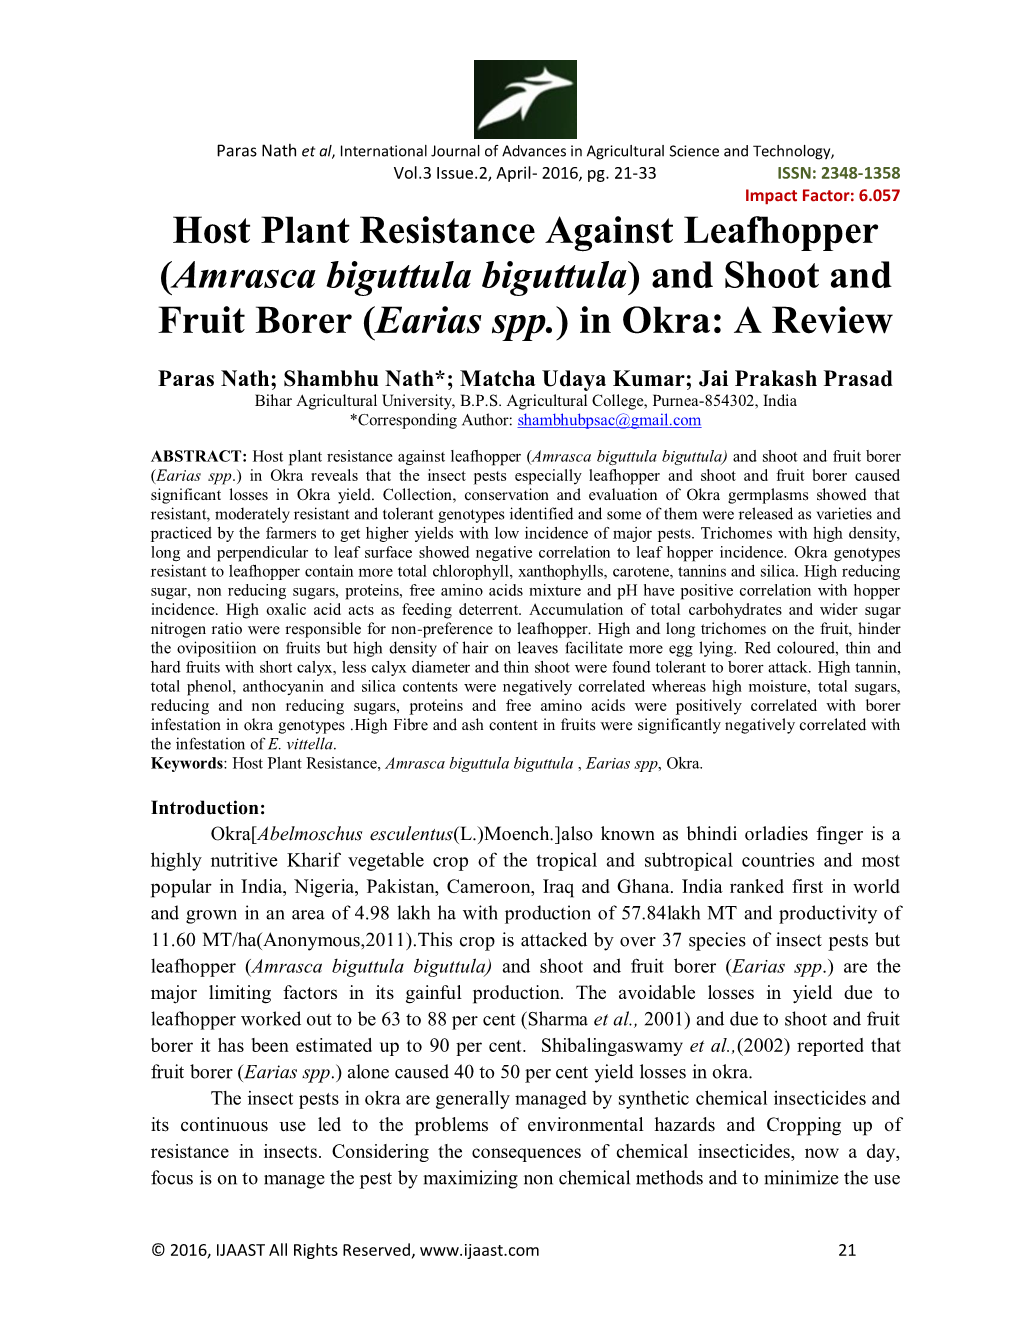 Host Plant Resistance Against Leafhopper (Amrasca Biguttula Biguttula) and Shoot and Fruit Borer (Earias Spp.) in Okra: a Review